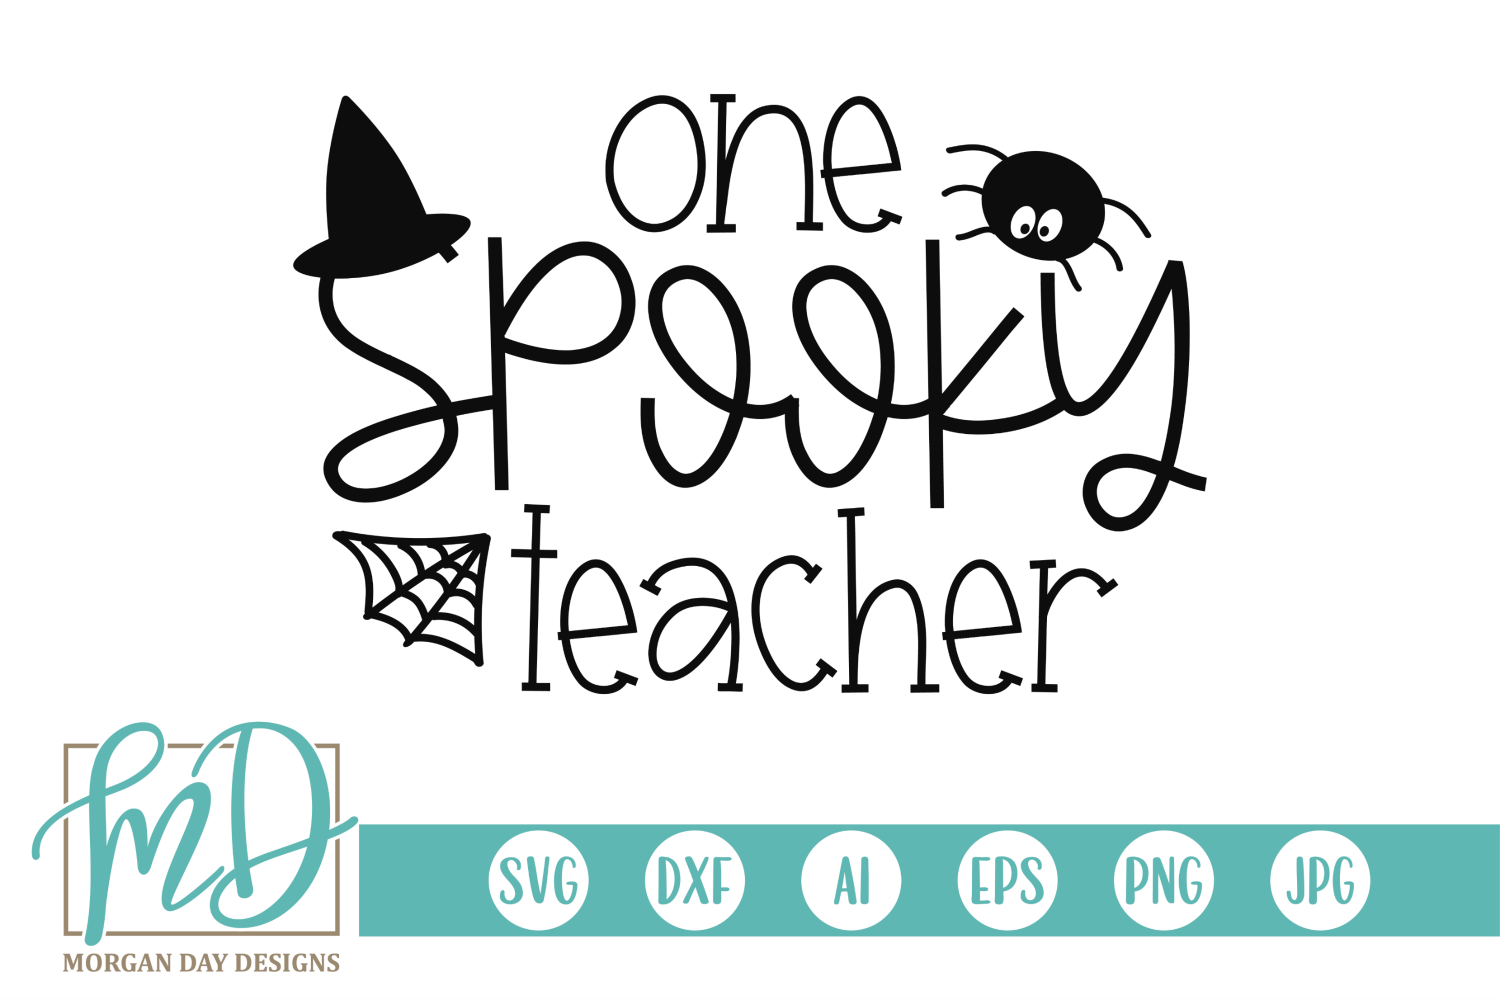 One Spooky Teacher Svg By Morgan Day Designs Thehungryjpeg Com